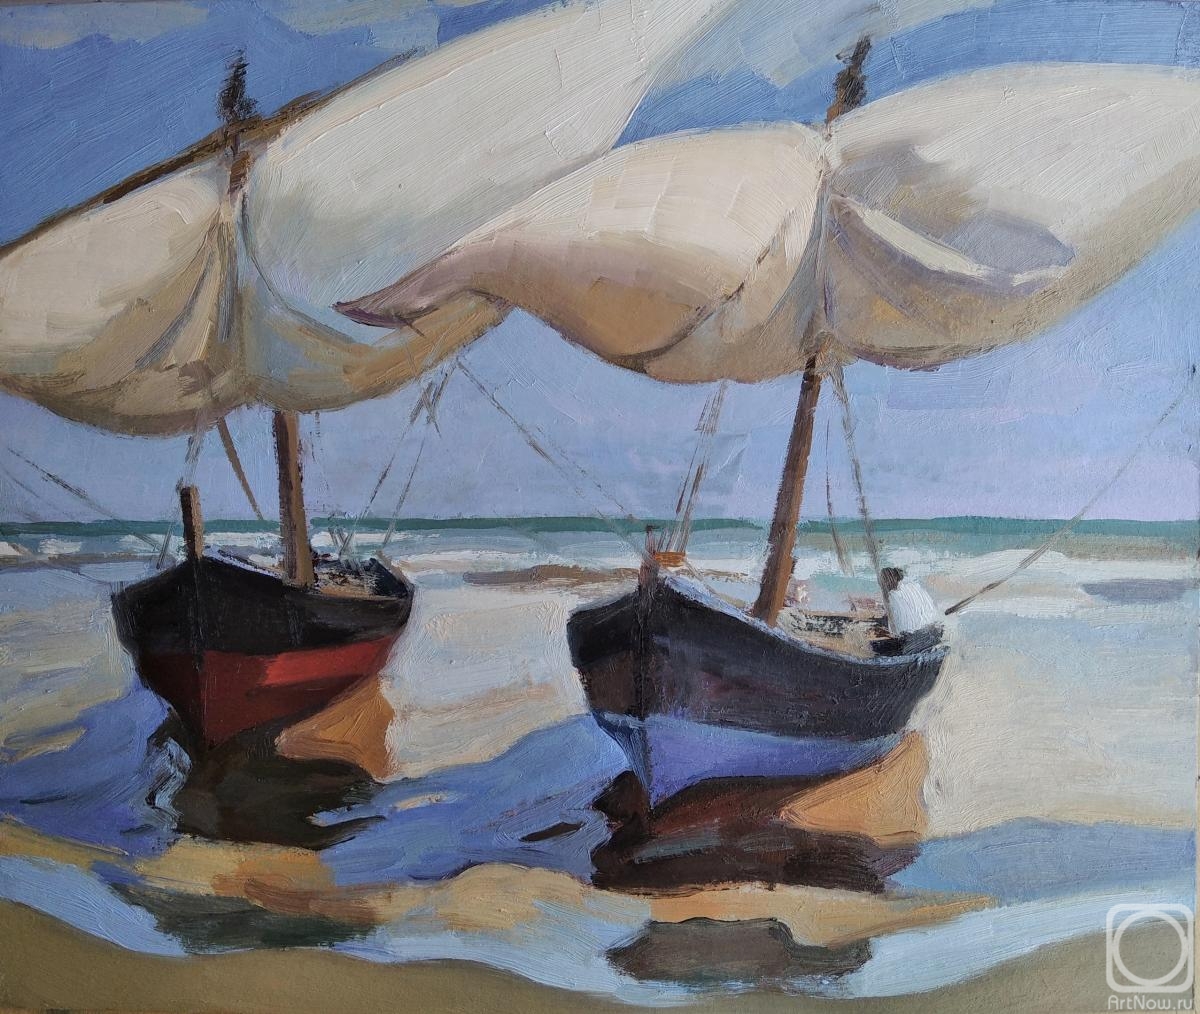 Rohlina Polina. Copy of the painting "Beached Boats" by Joaquin Sorolla